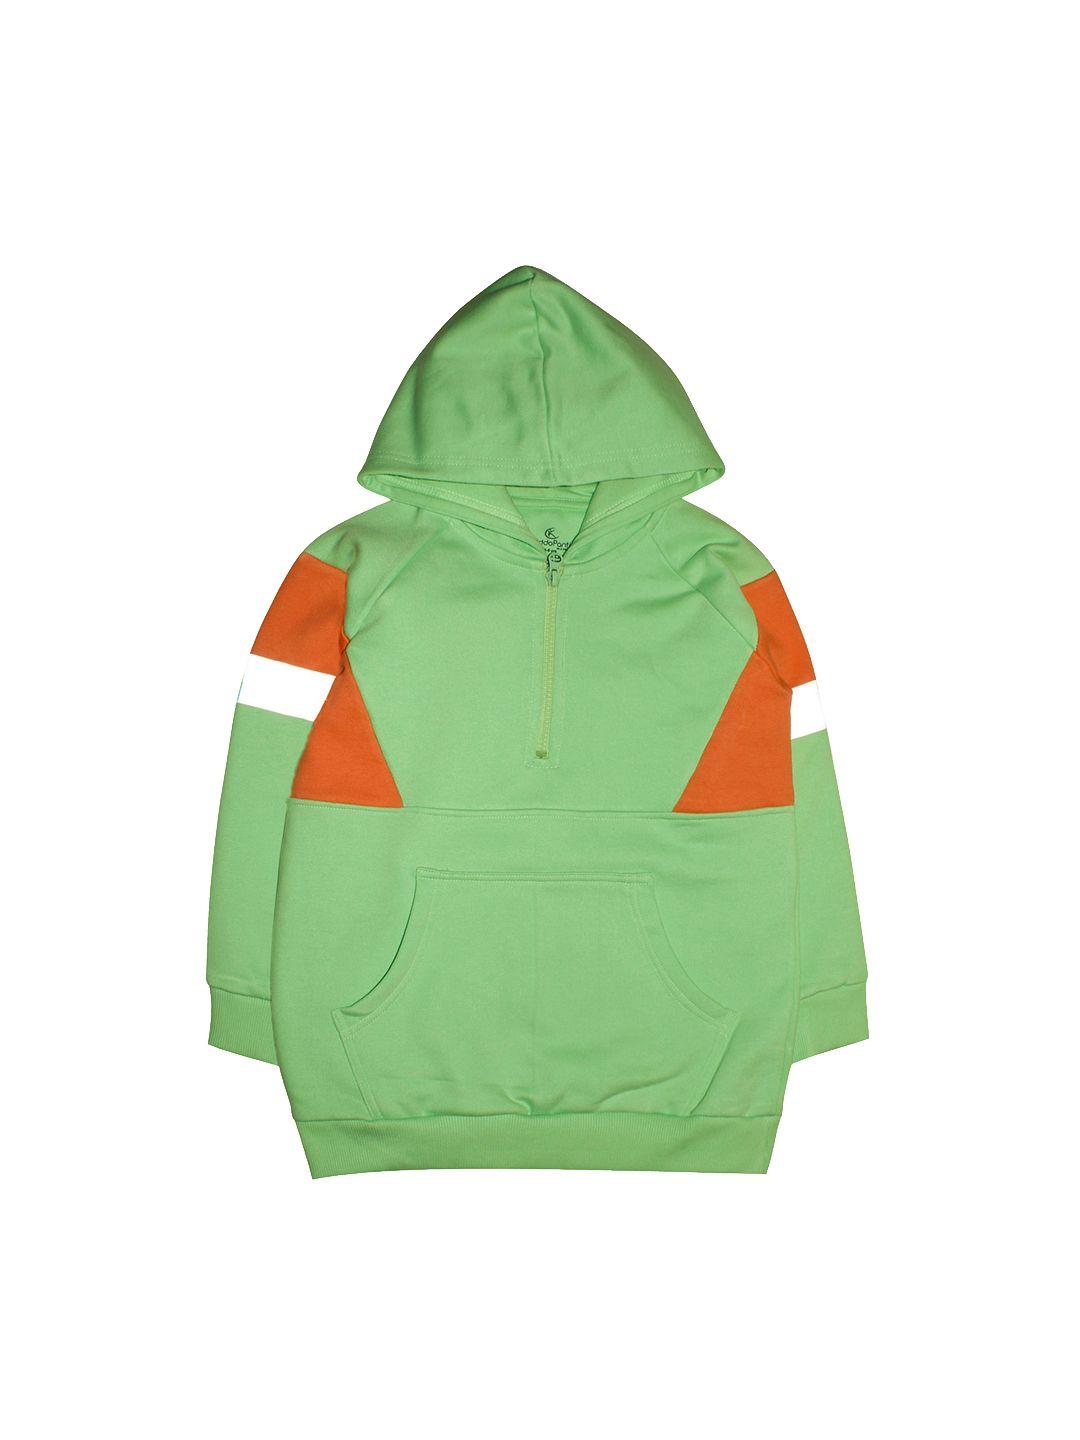 kiddopanti unisex kids green hooded sweatshirt